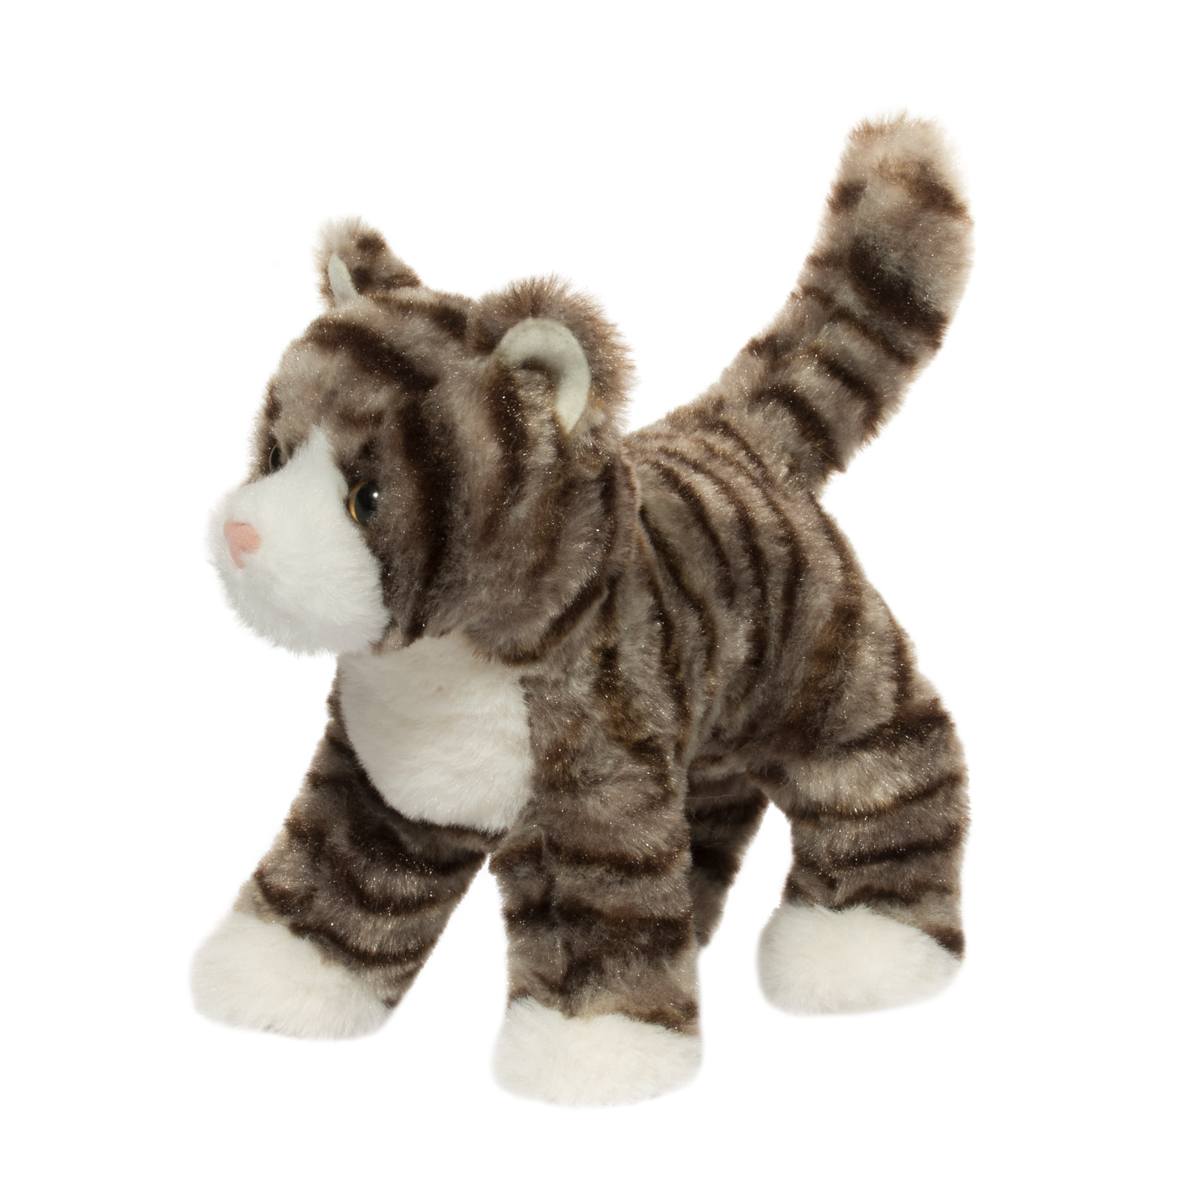 Zigby Gray Striped Cat 8" Plush Toy